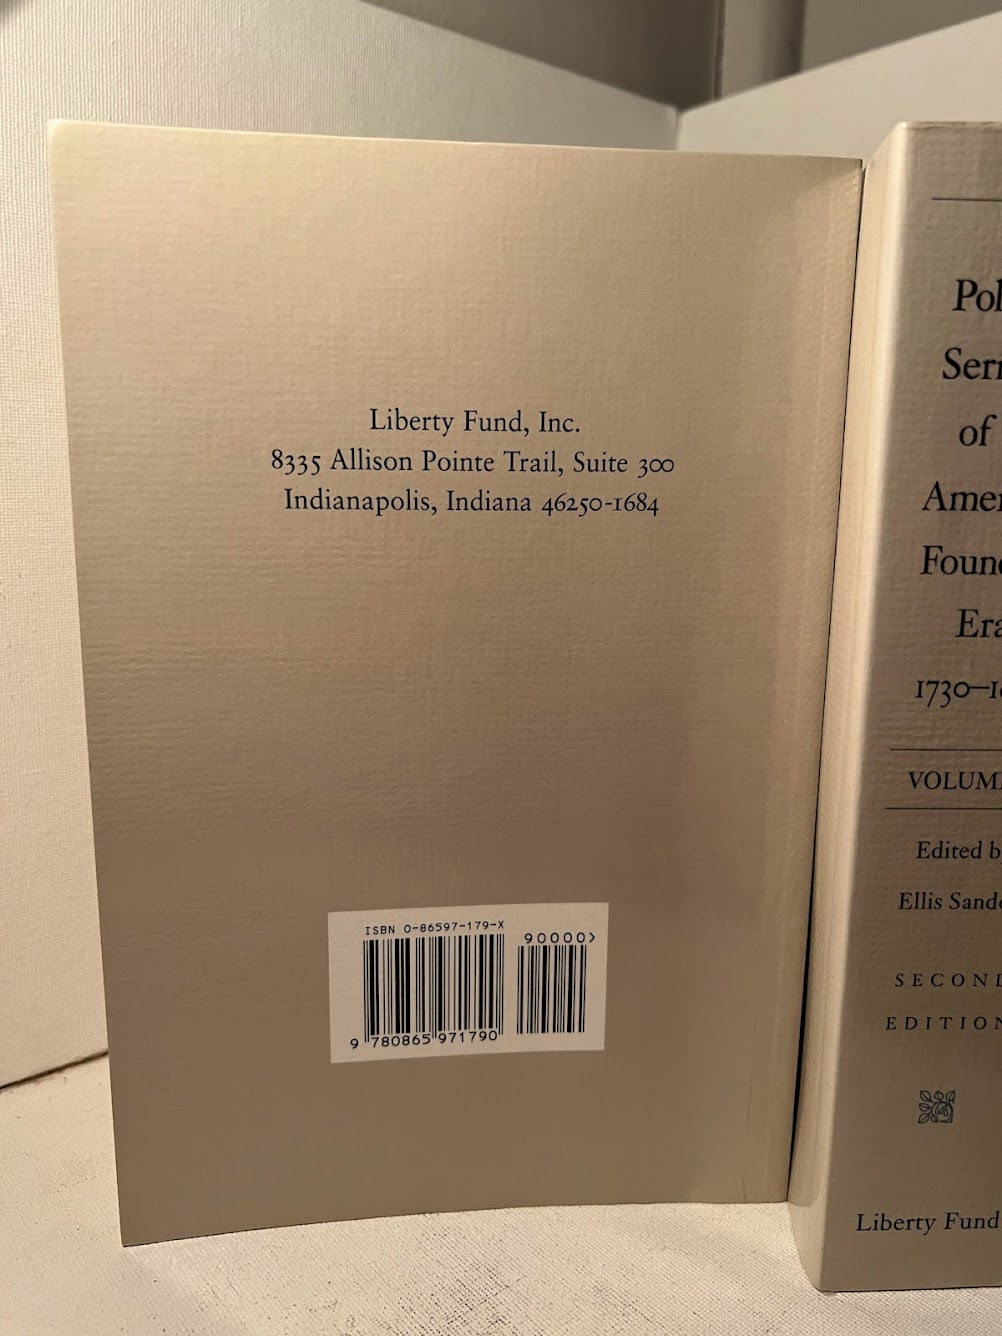 Political Sermons of the American Founding Era 1730-1805 edited by Ellis Sandoz